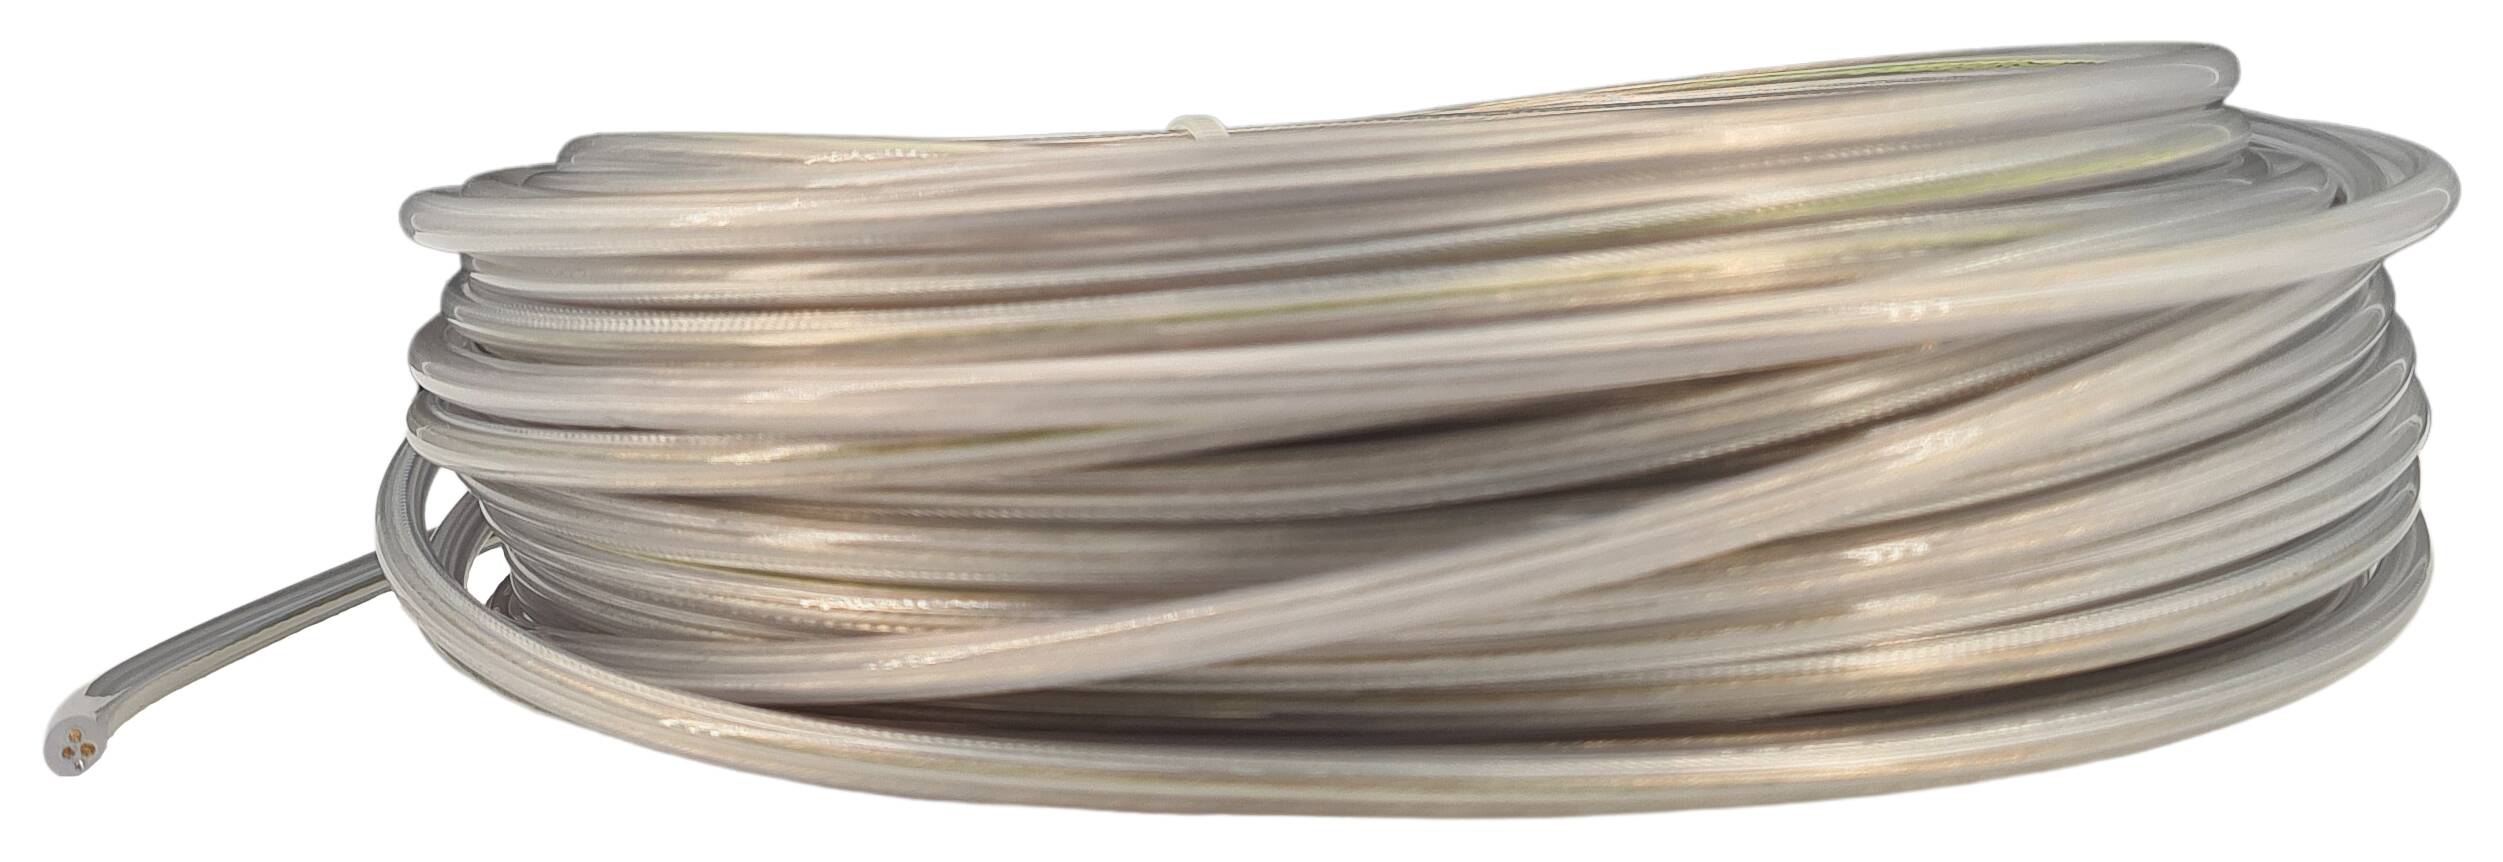 Kabel m. Stahlseil 3x0,75 rund FEP/PVC AD = 5,3 mm ummantelt transparent